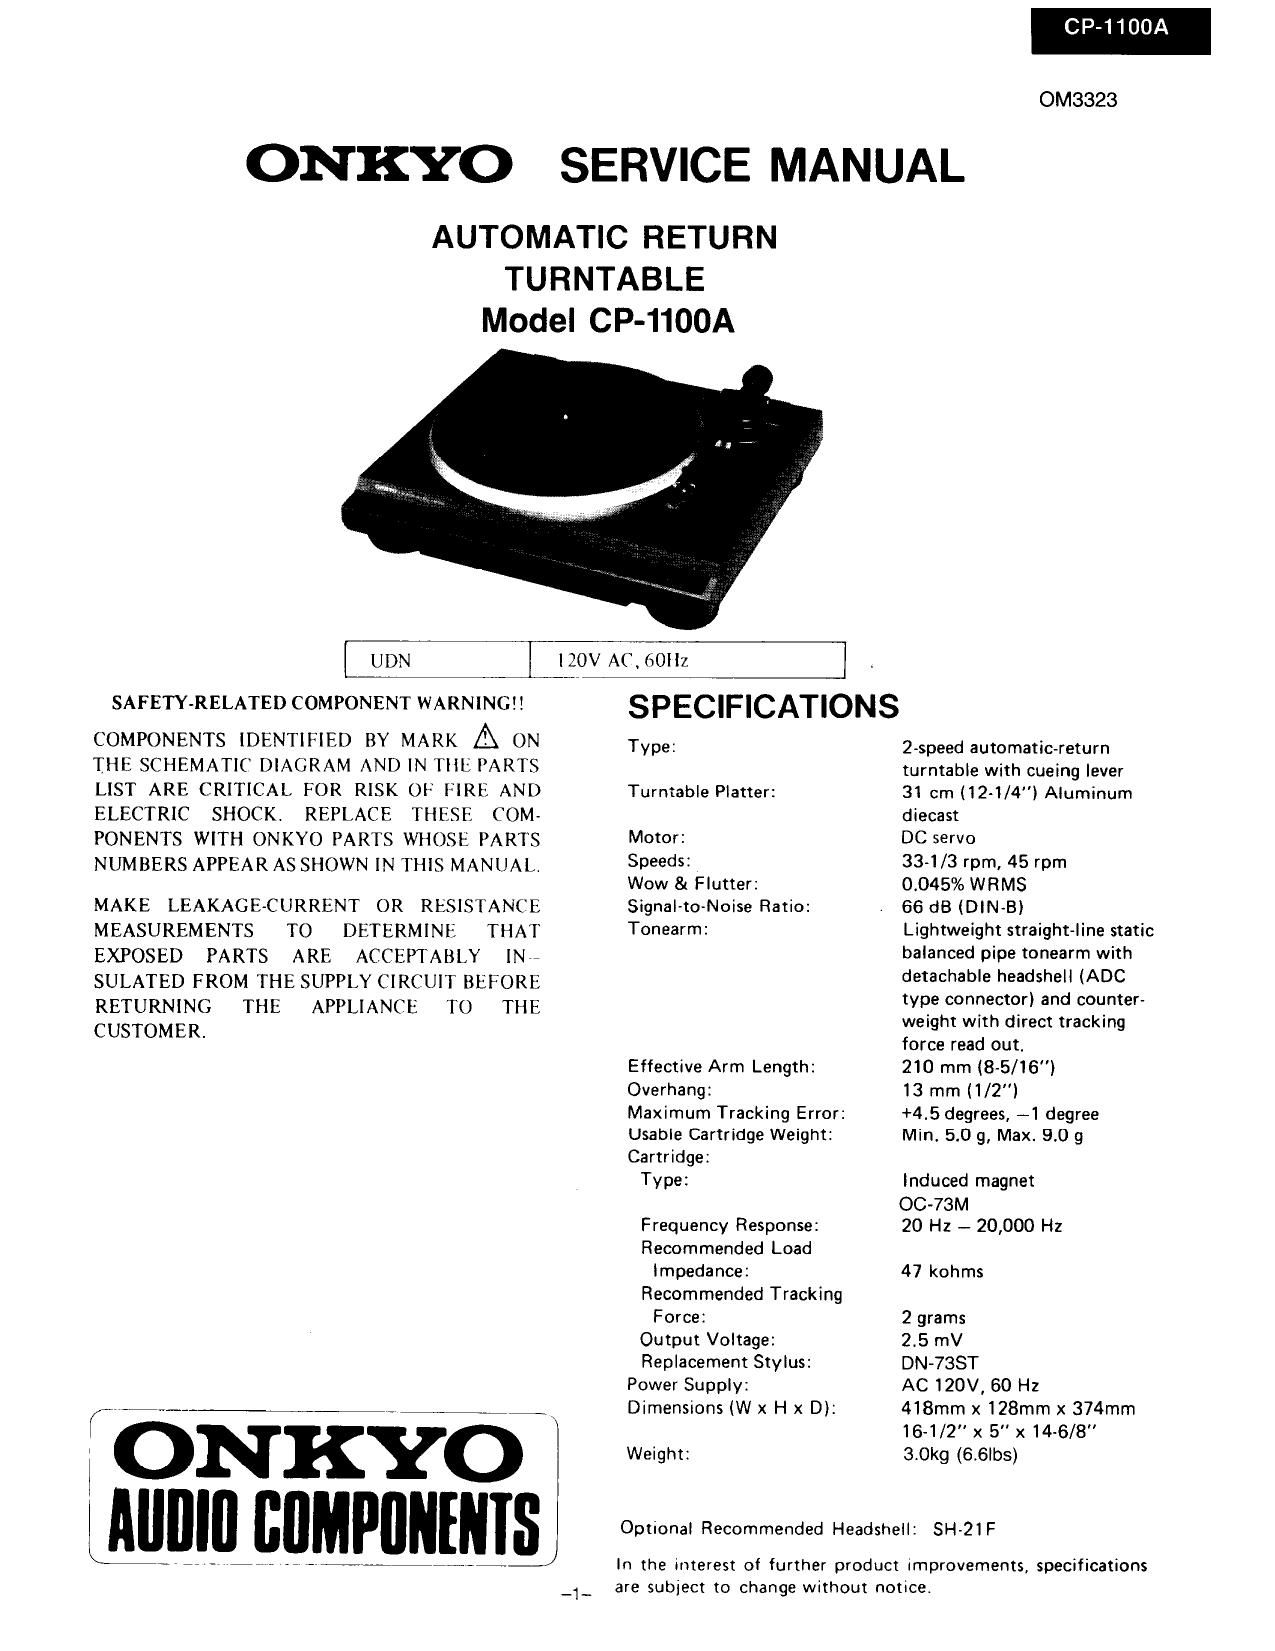 Onkyo CP 1100 A Service Manual